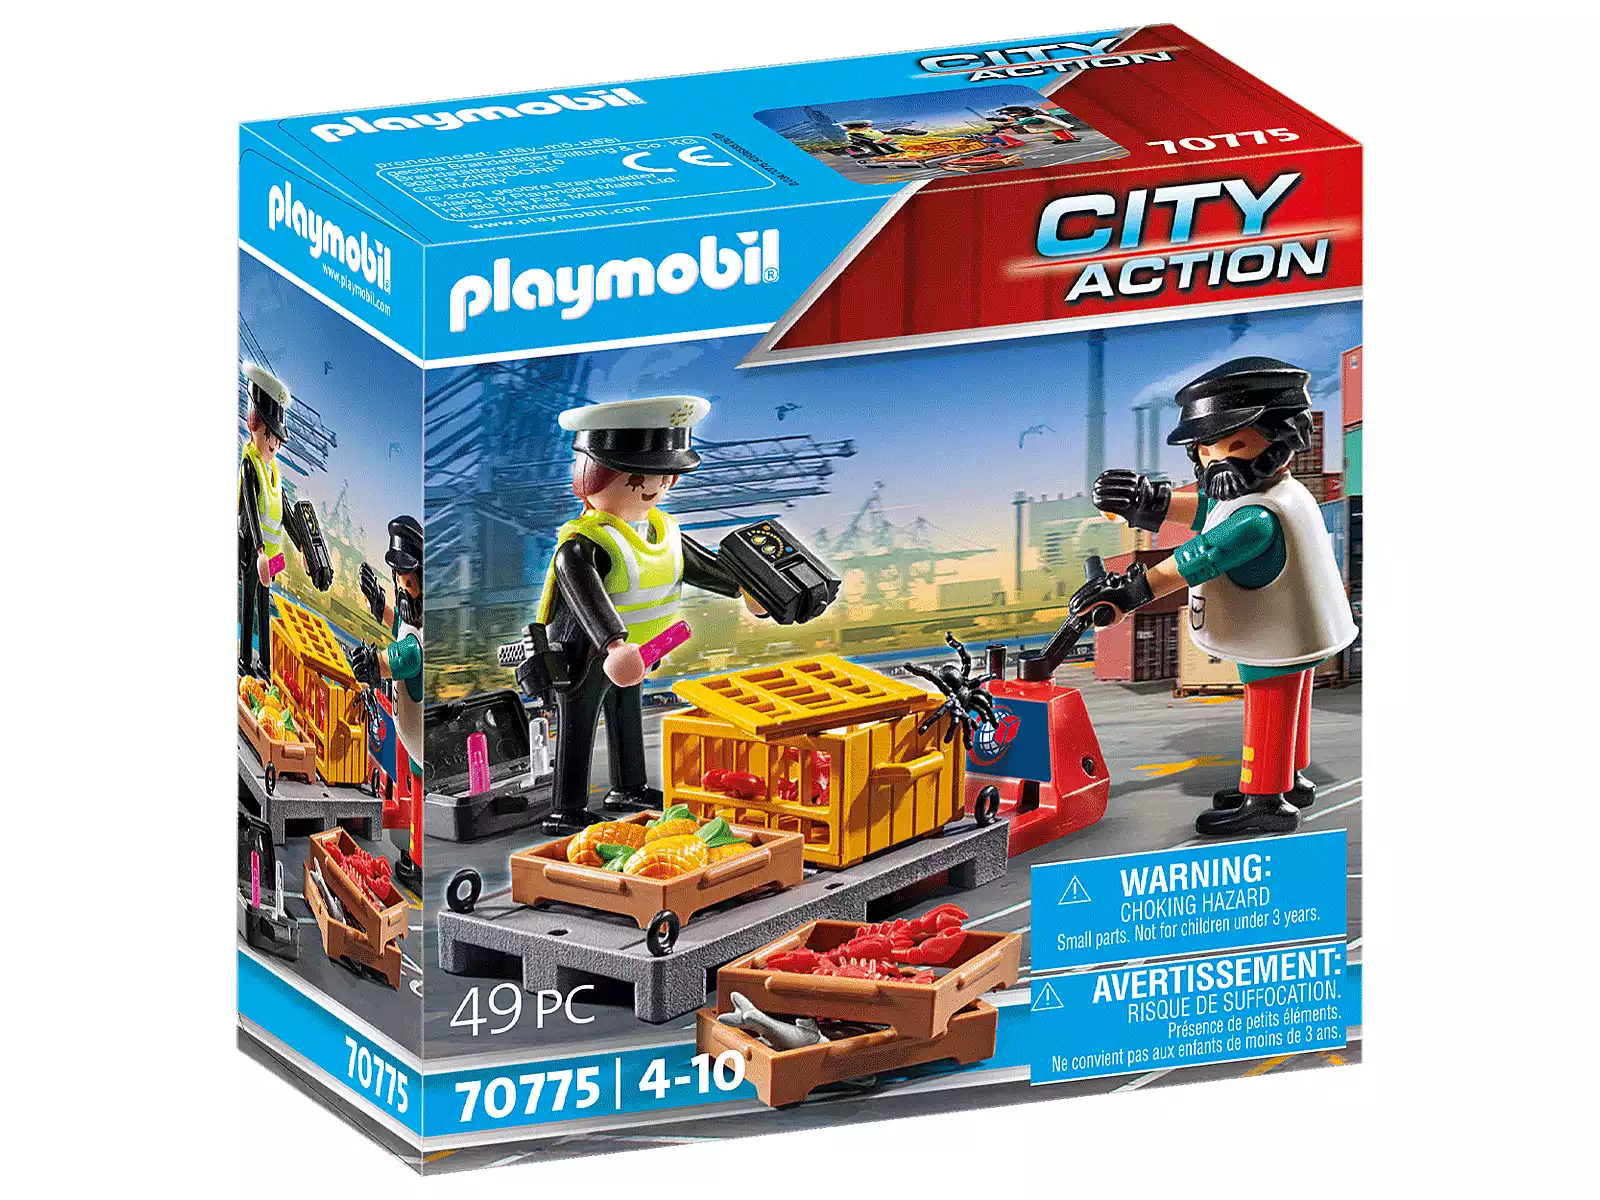 Acheter Playmobil City Life Playmobil Cantine 71333 - Juguetilandia